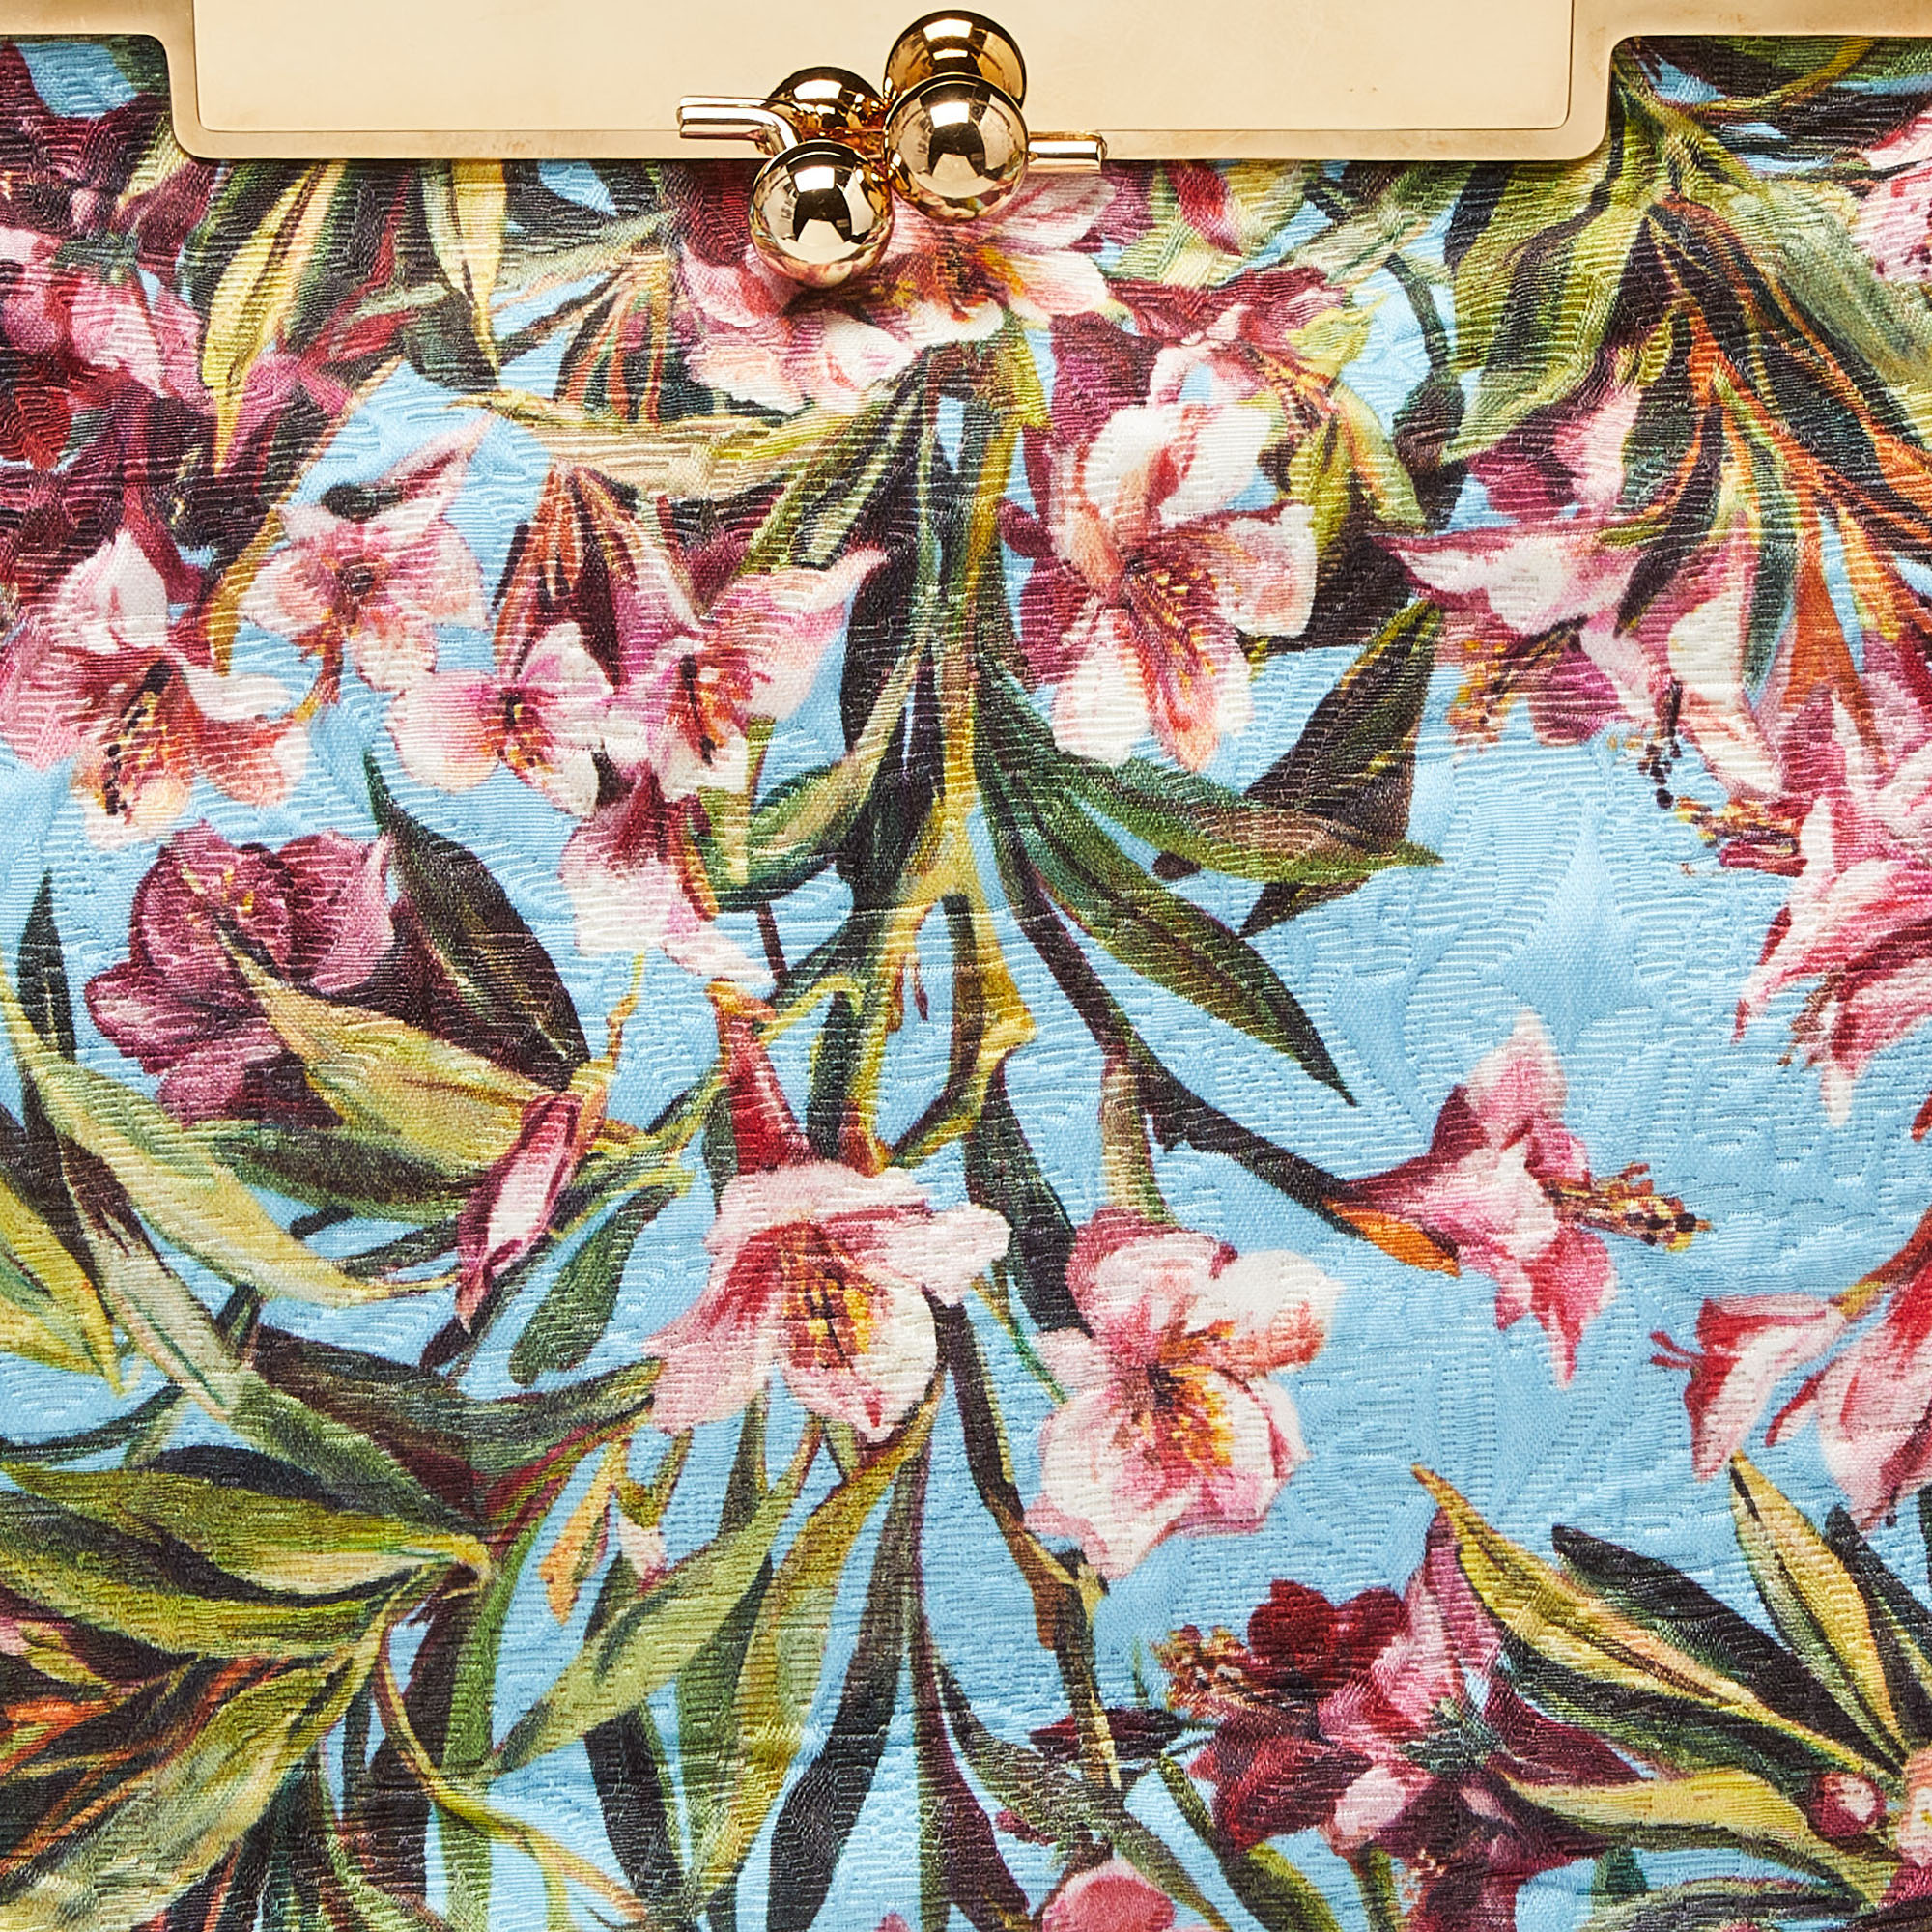 Dolce & Gabbana Multicolor Floral Print Canvas Kisslock Frame Bag